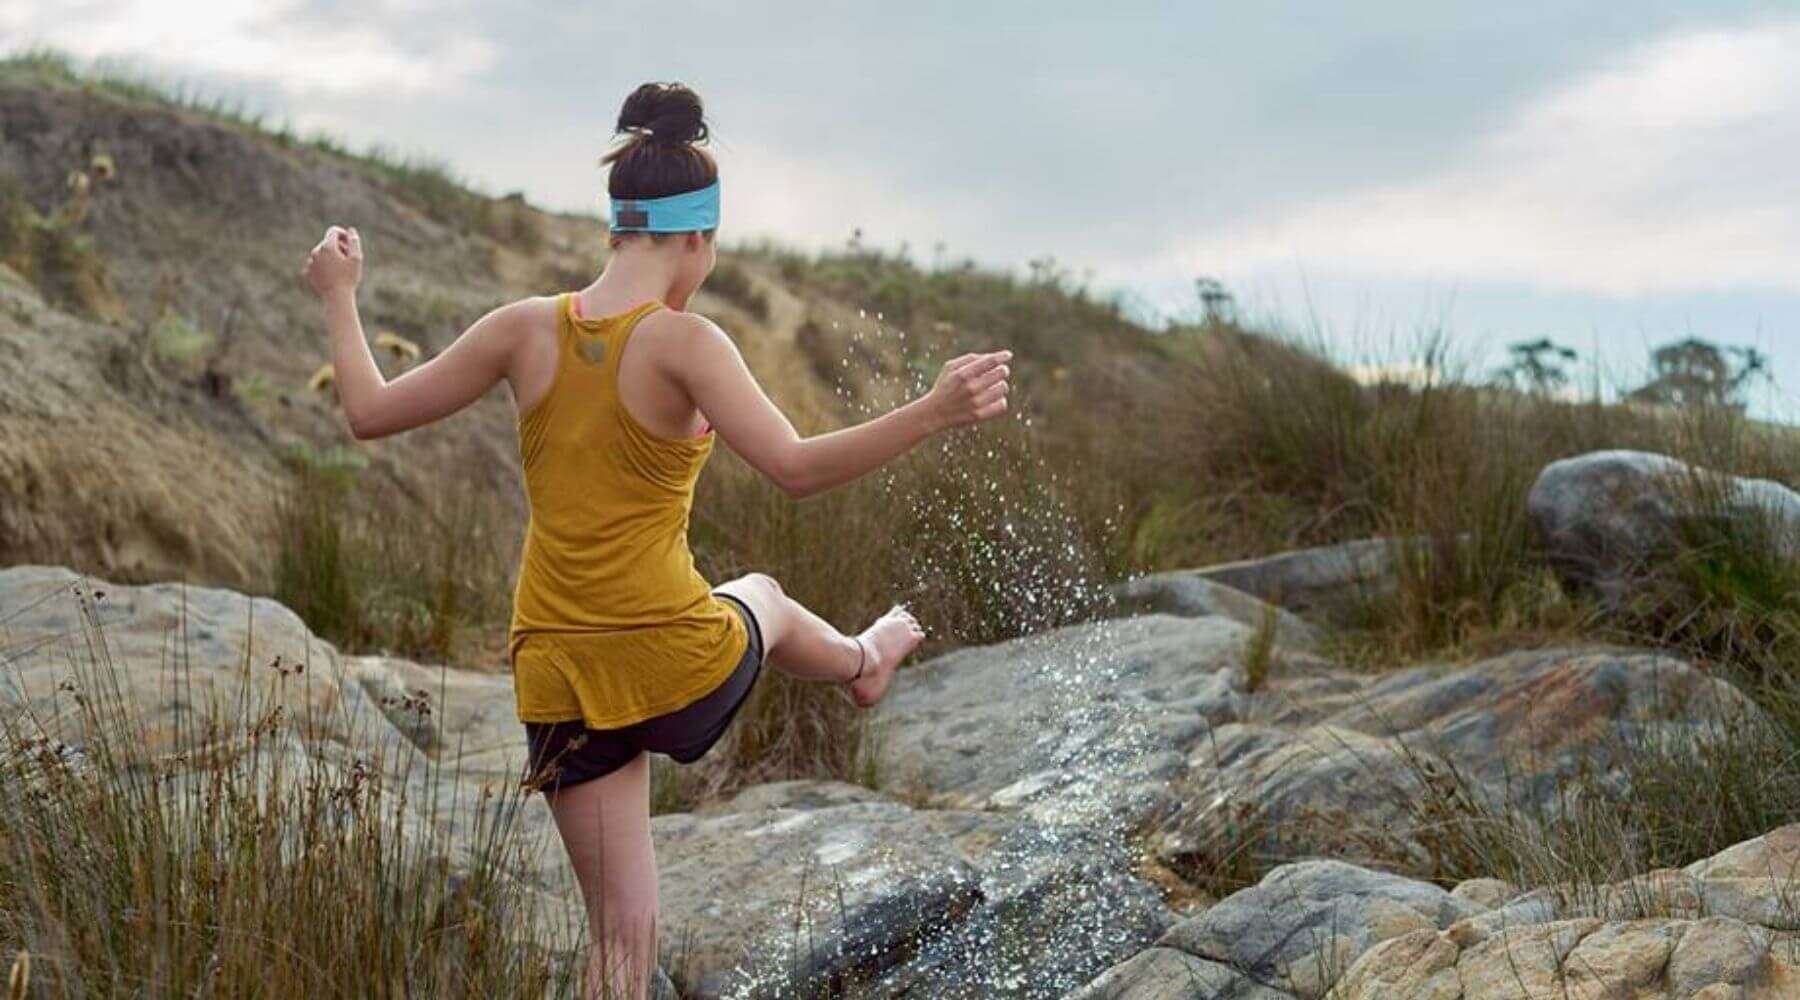 women kicking water outside wearing a sports heabband